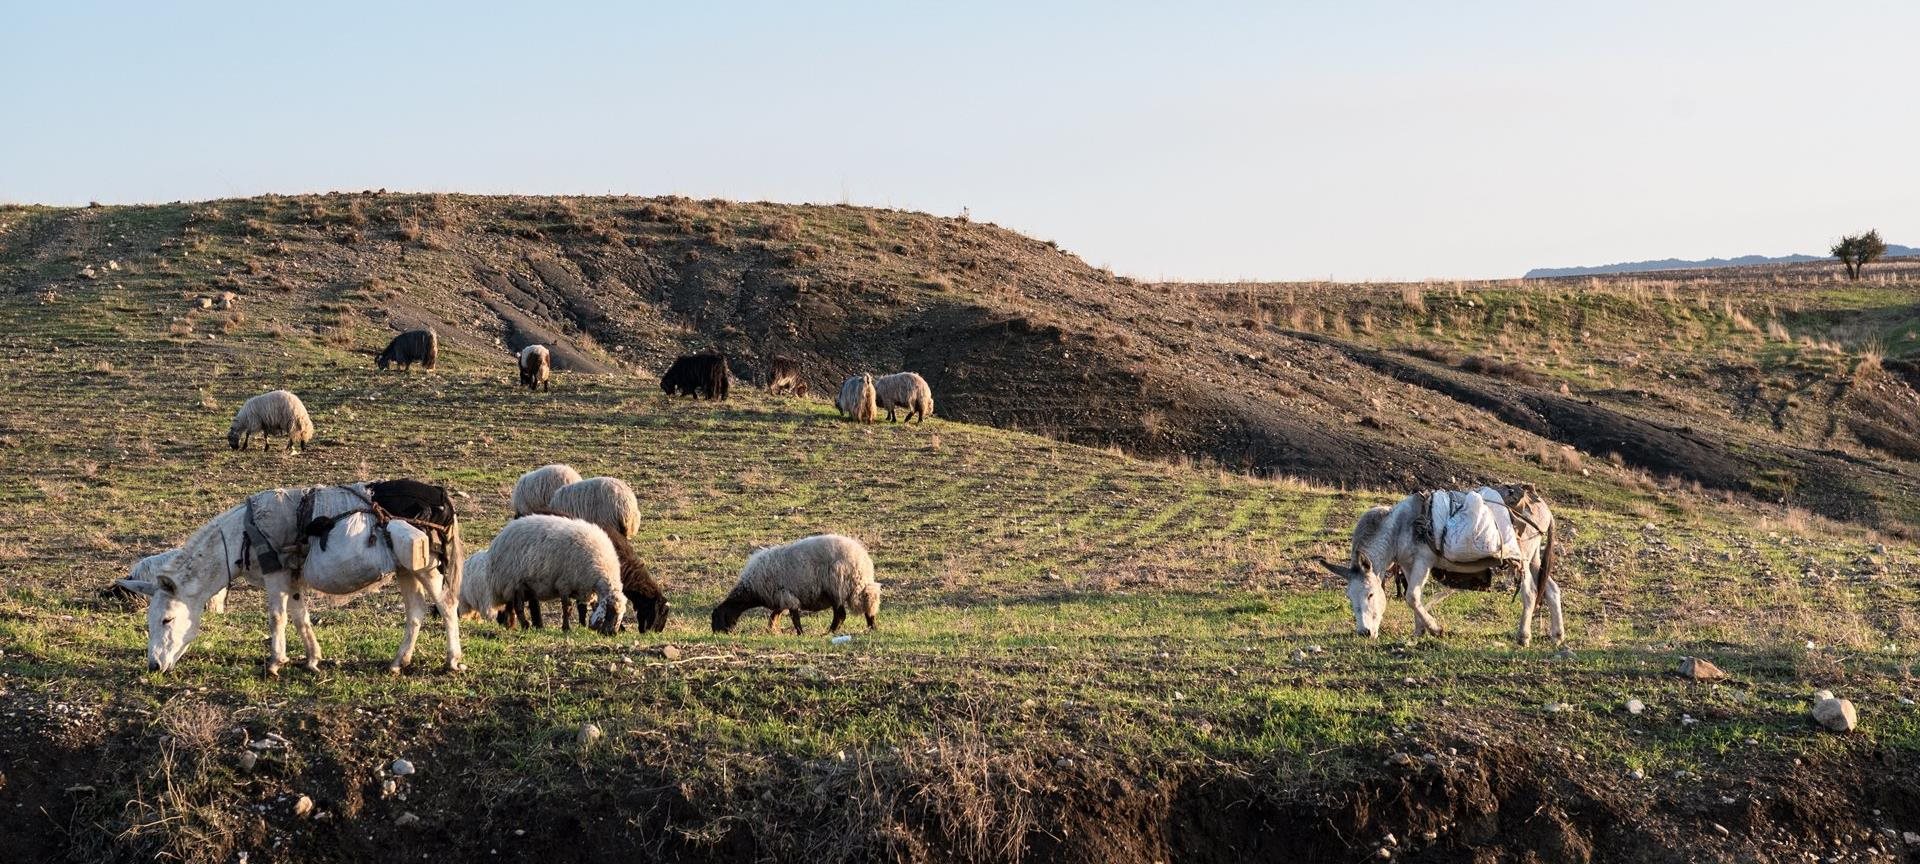 Sheep and donkeys grazing in Iraq